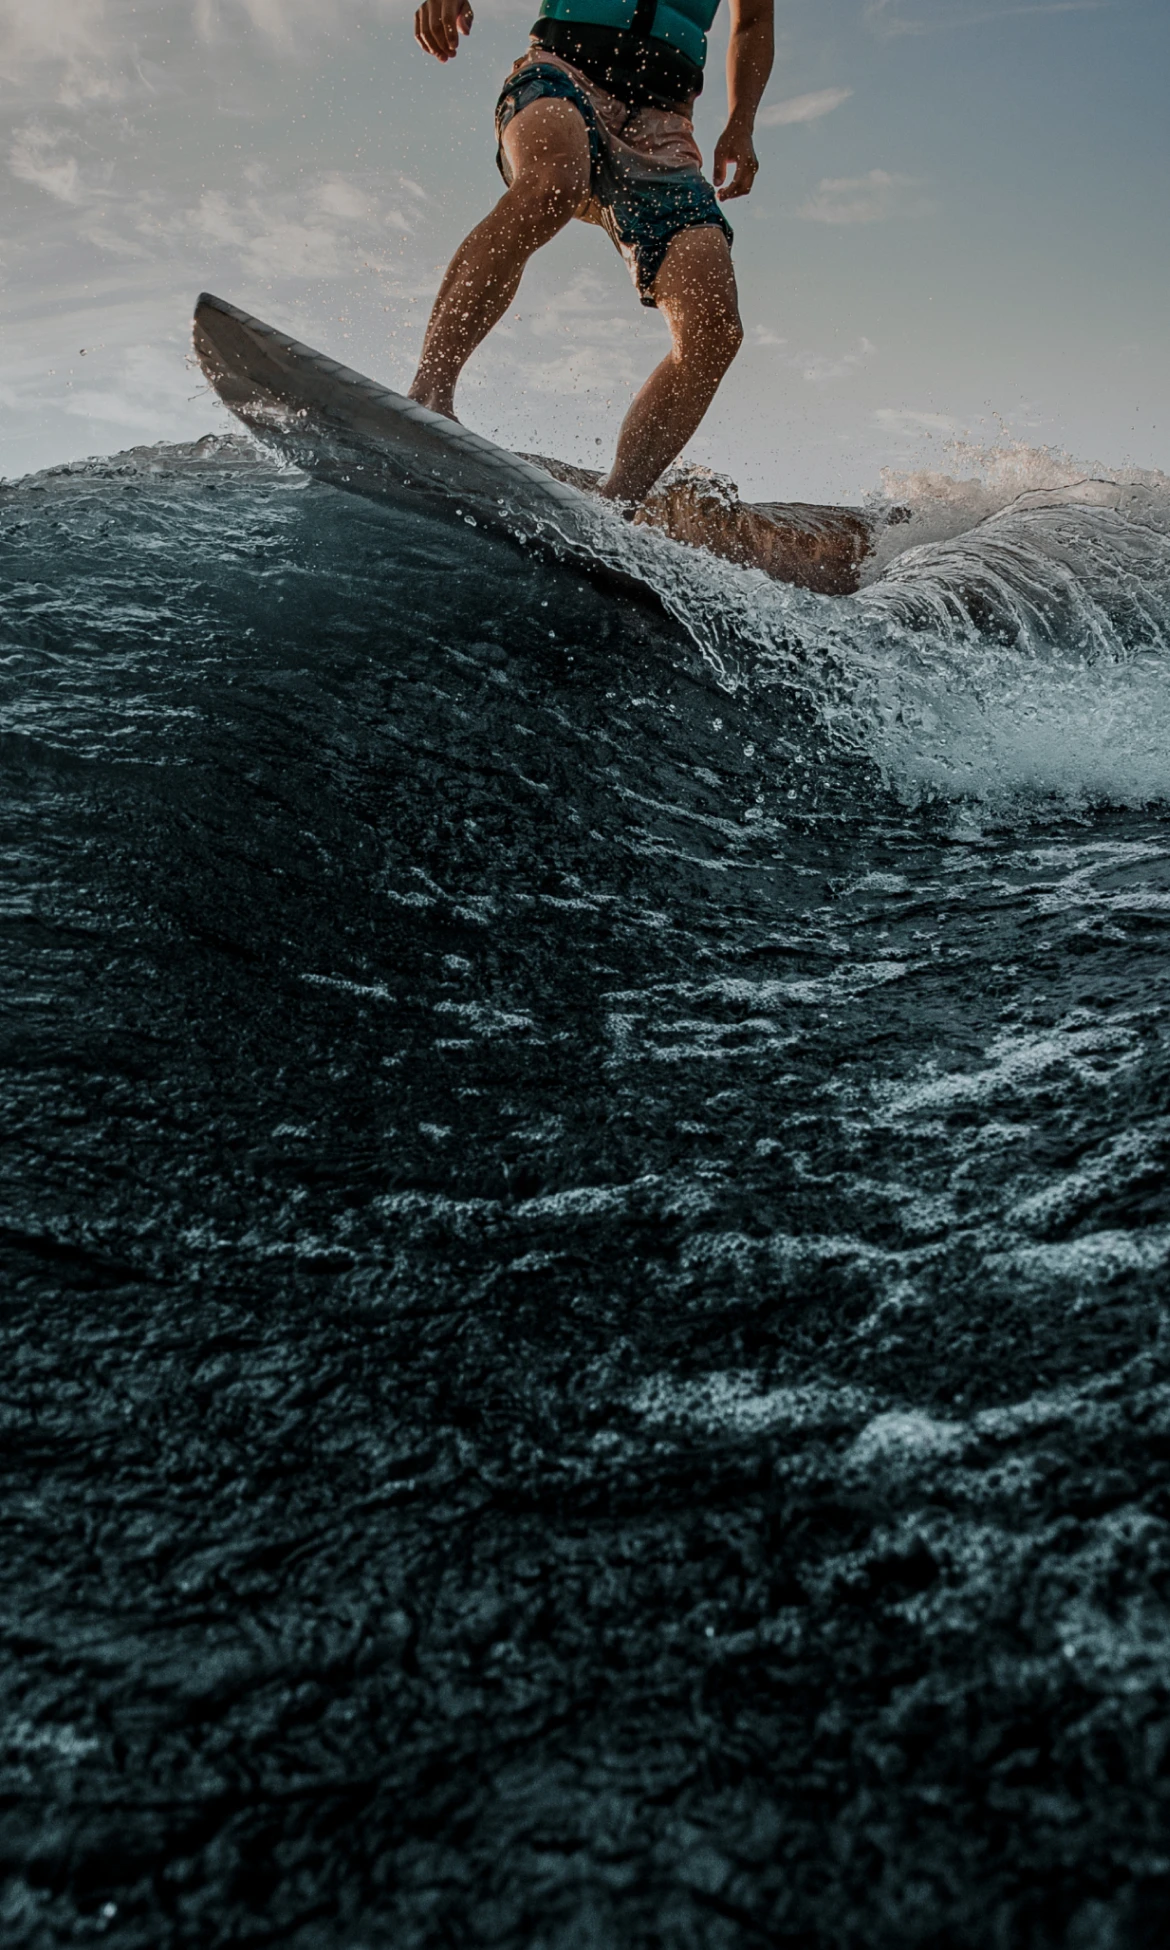 A surfer riding a deep blue wave